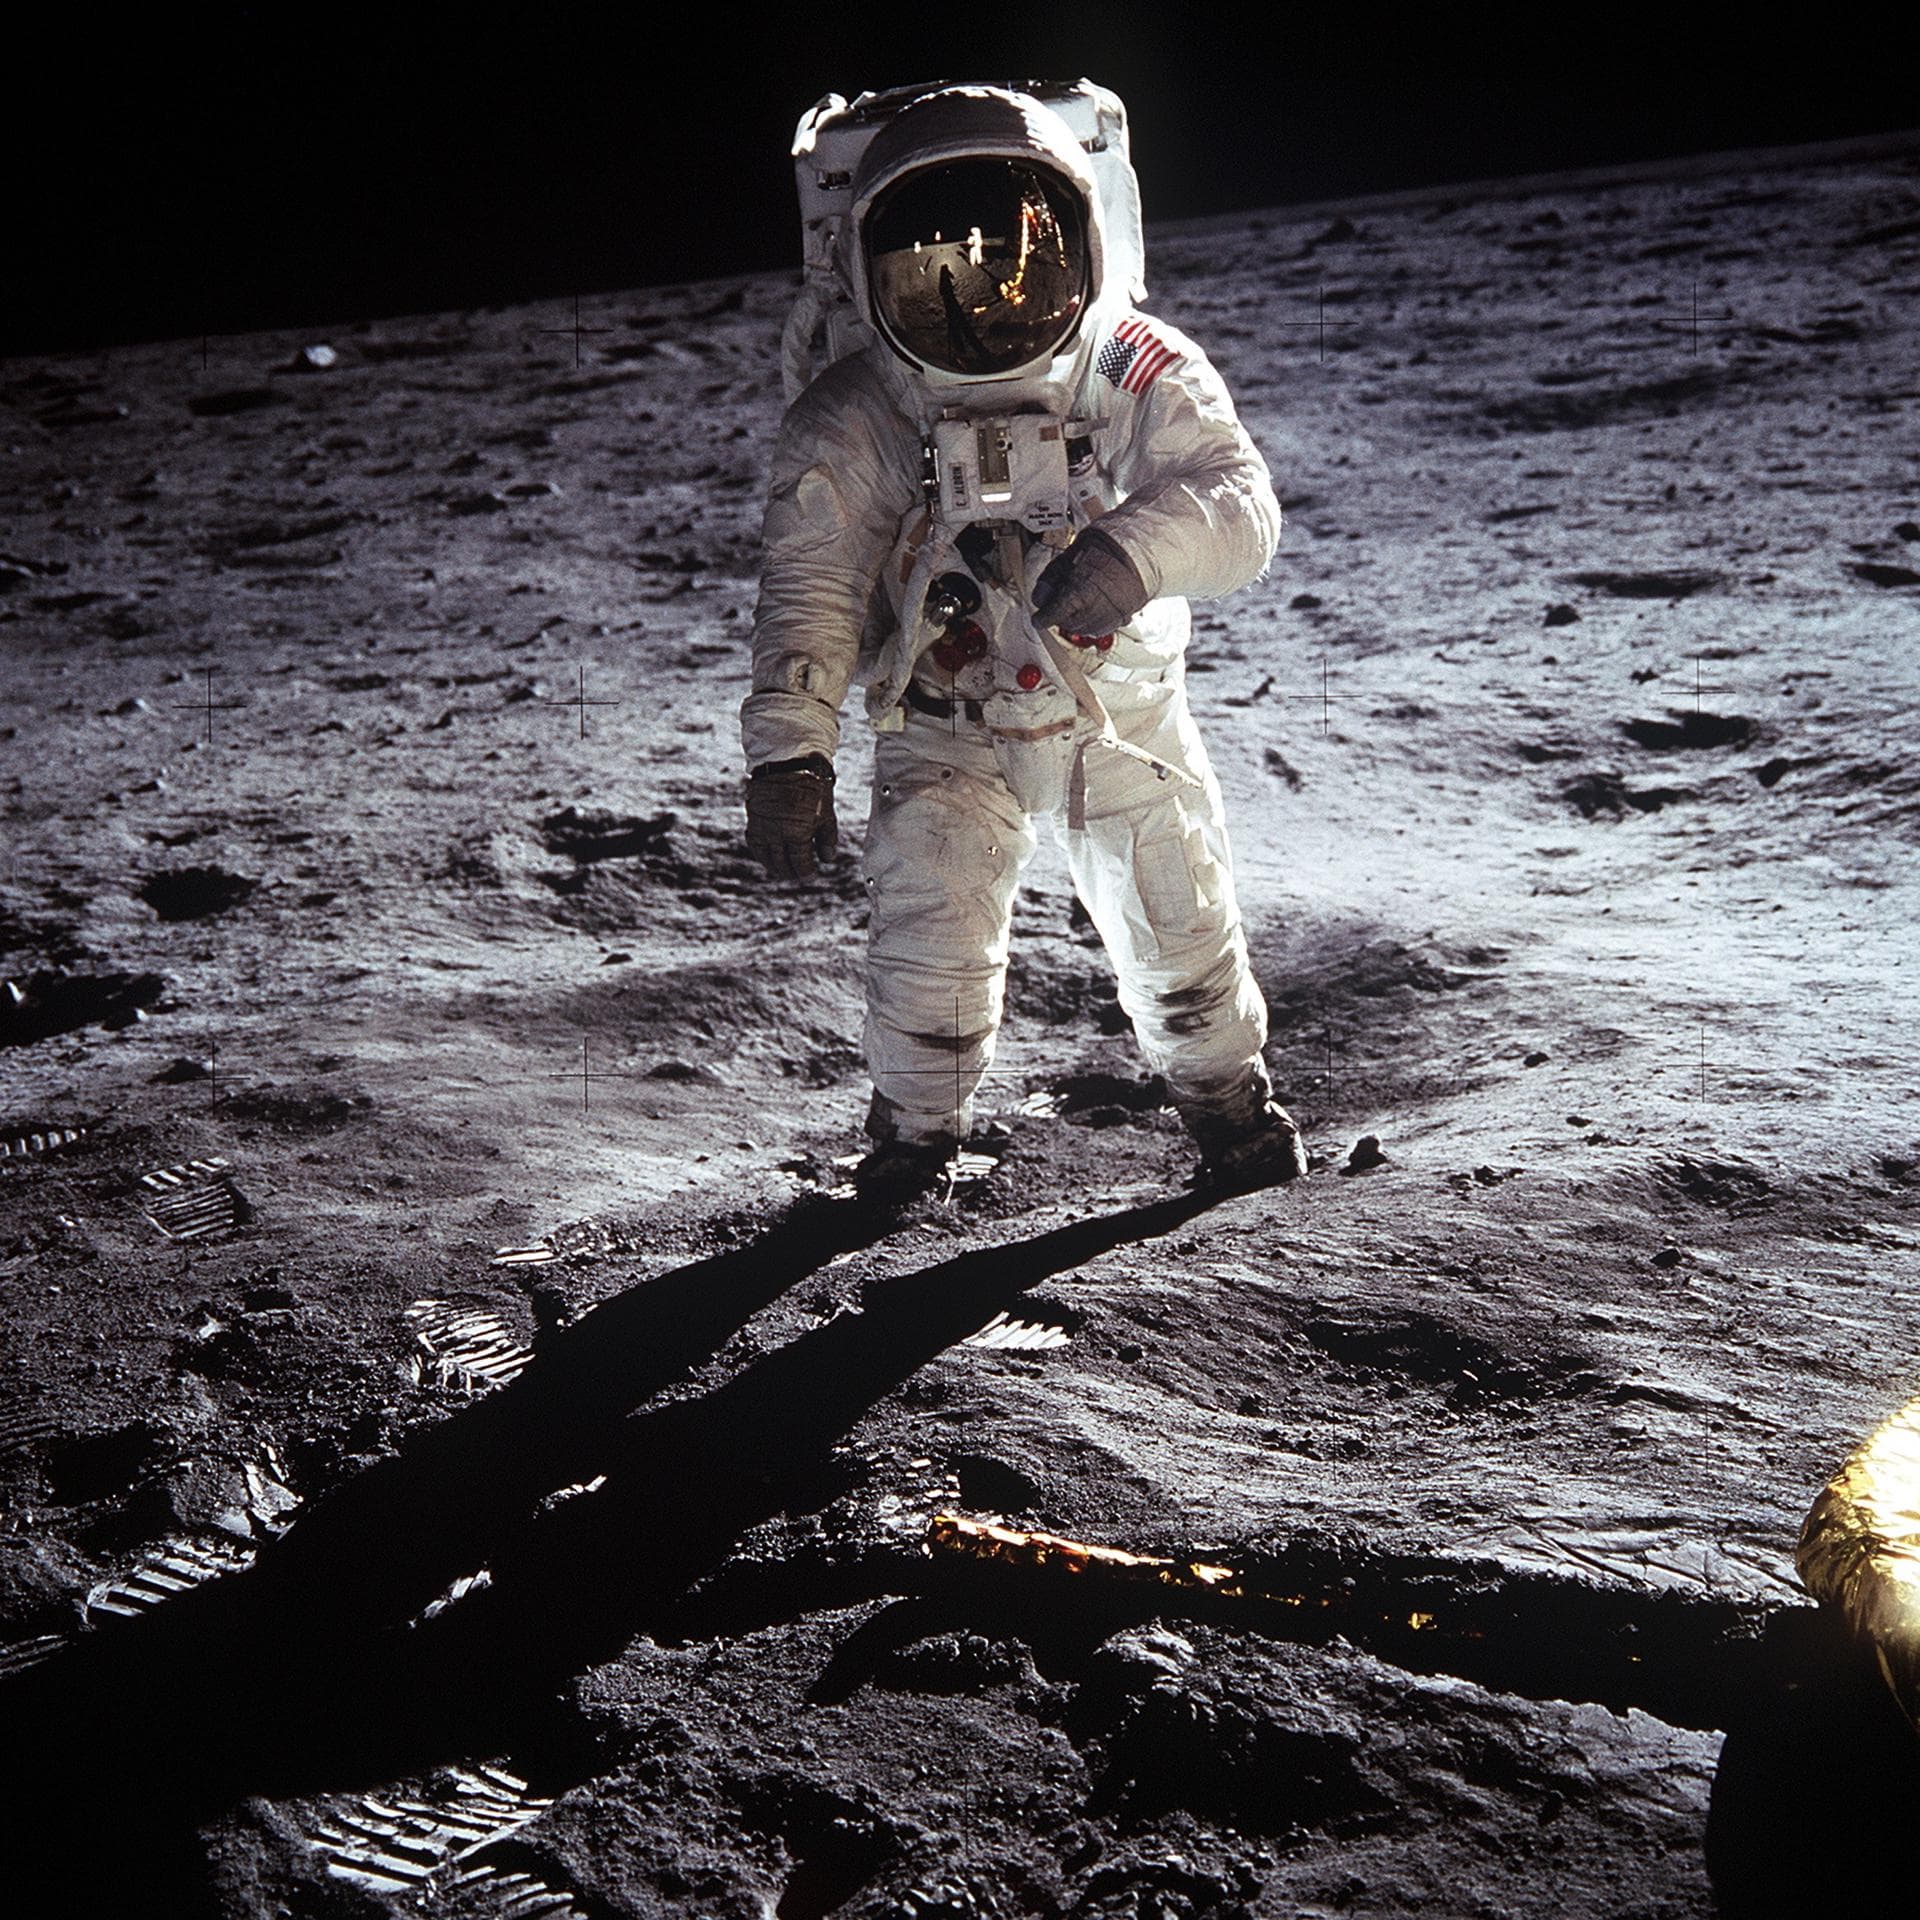 https://universemagazine.com/wp-content/uploads/2019/07/Aldrin_Apollo_11.jpg